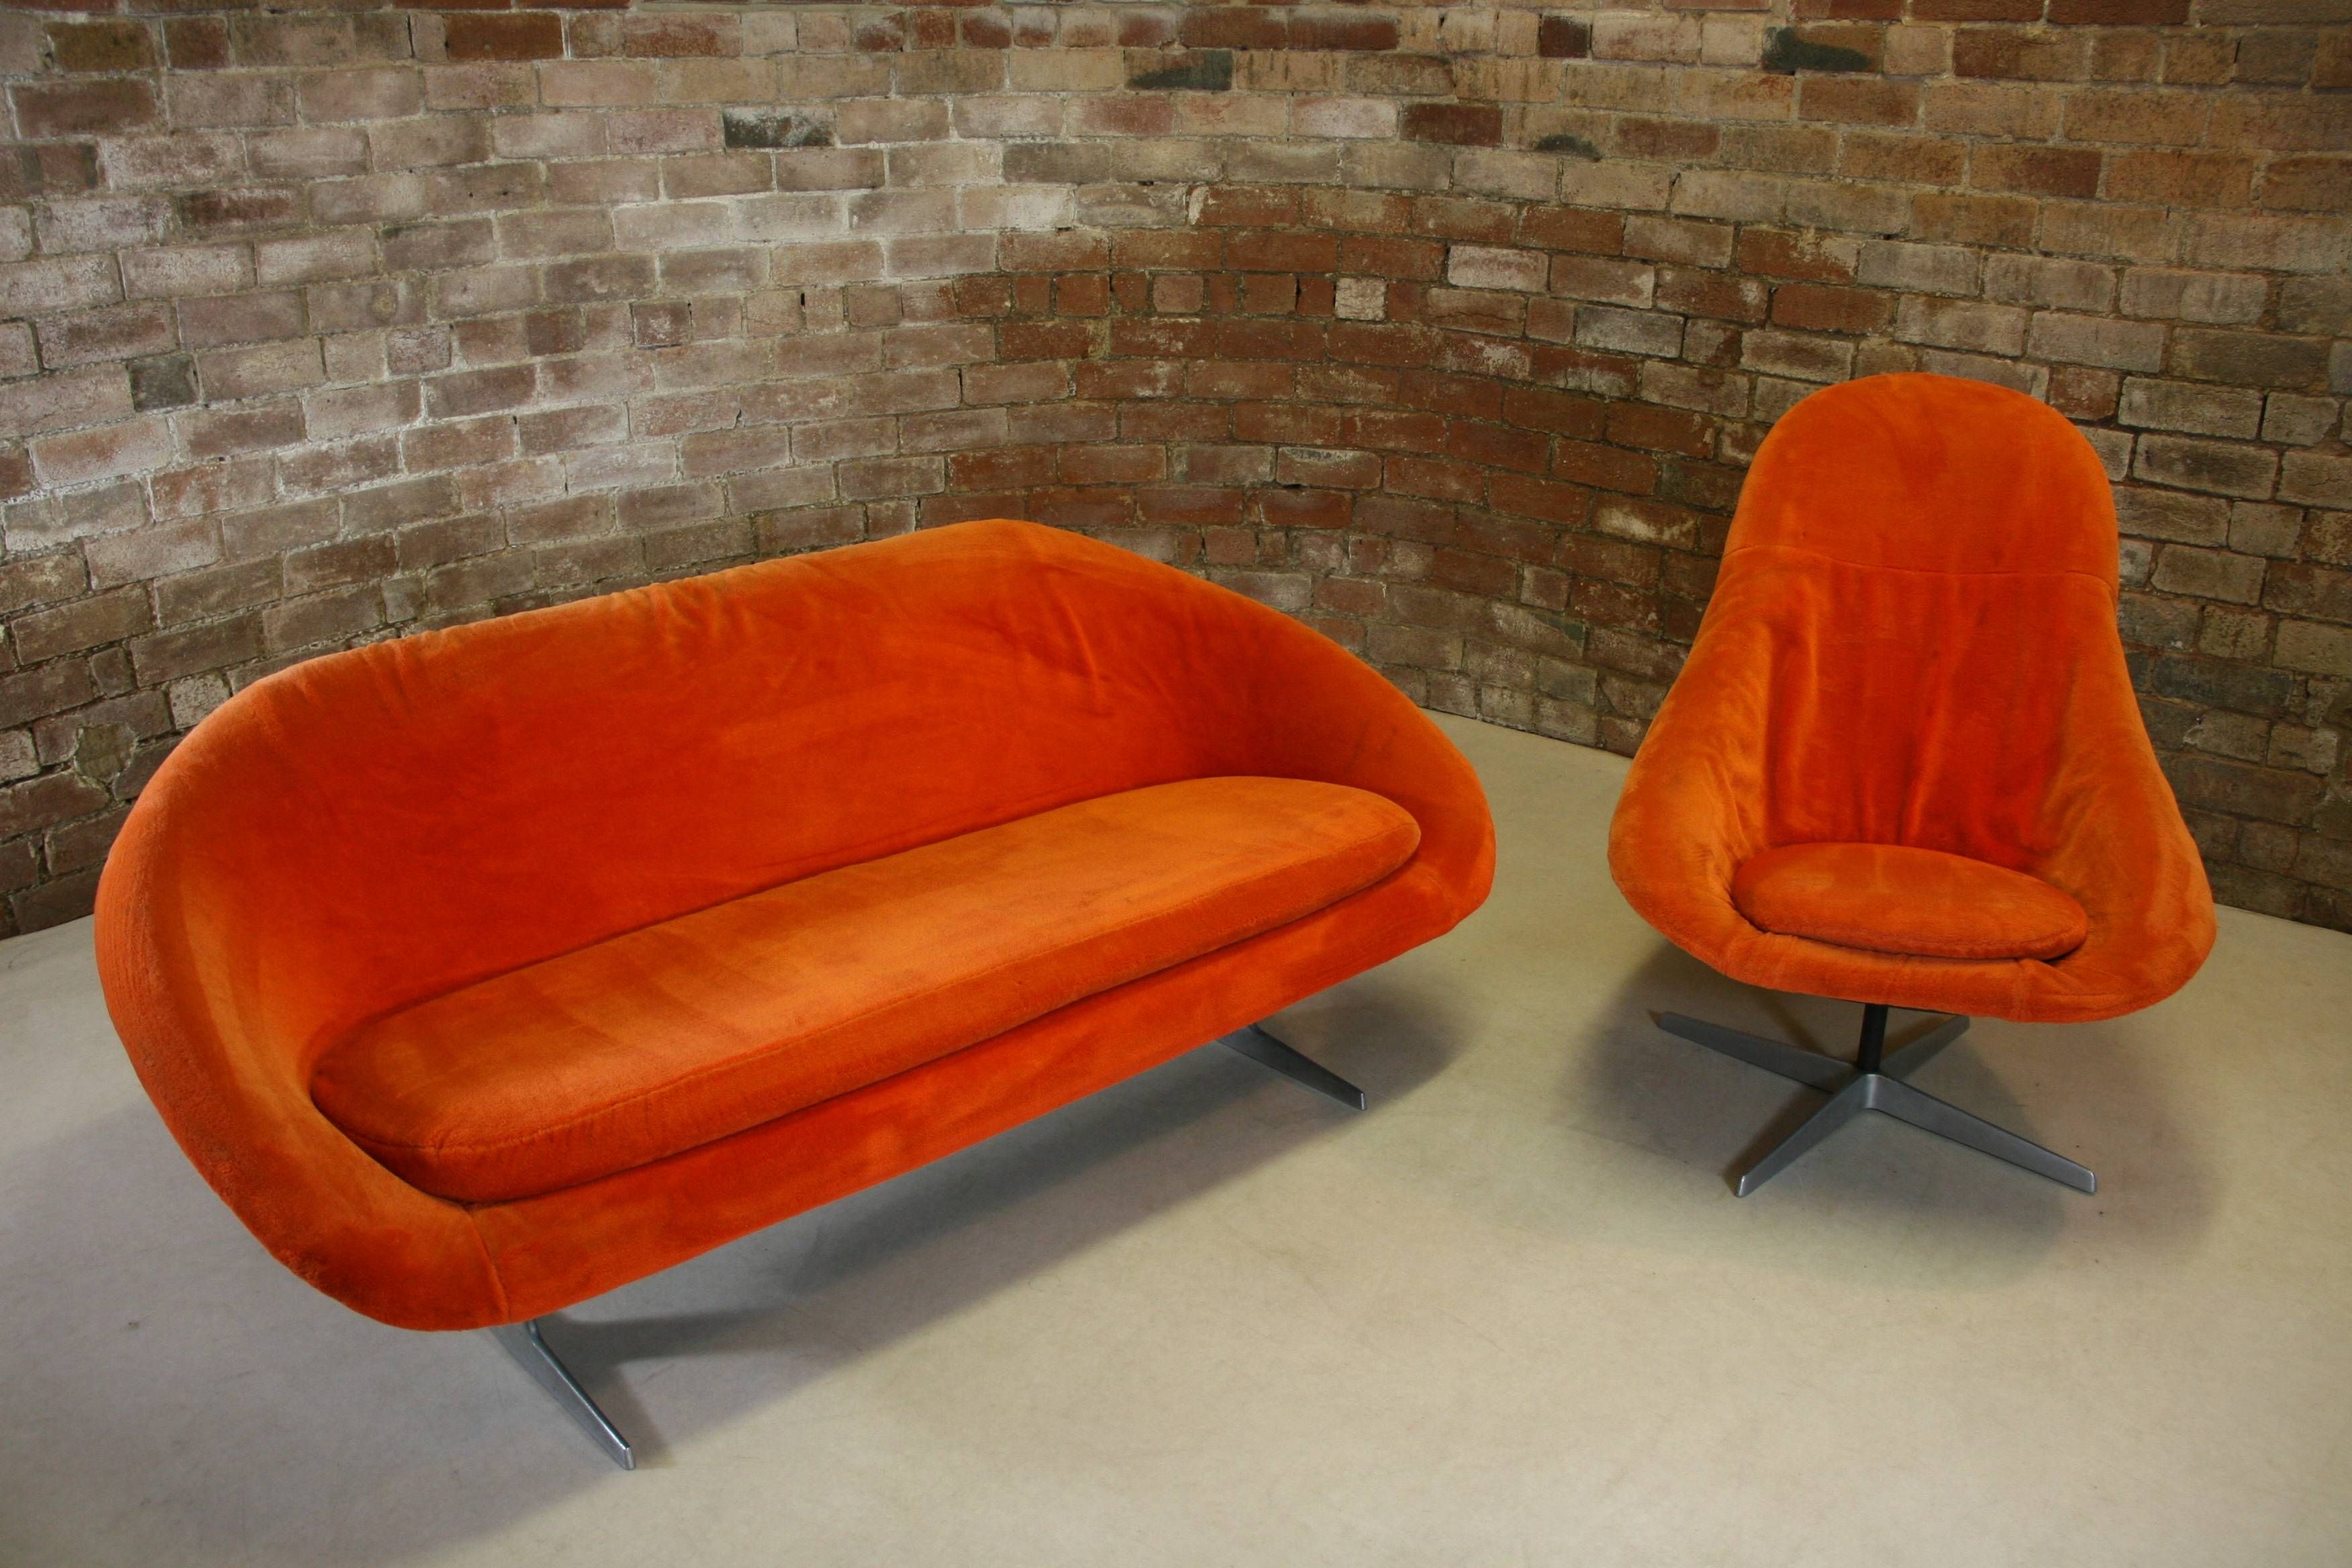 Orange Sofas Uk | Tehranmix Decoration Within Retro Sofas And Chairs (View 15 of 15)